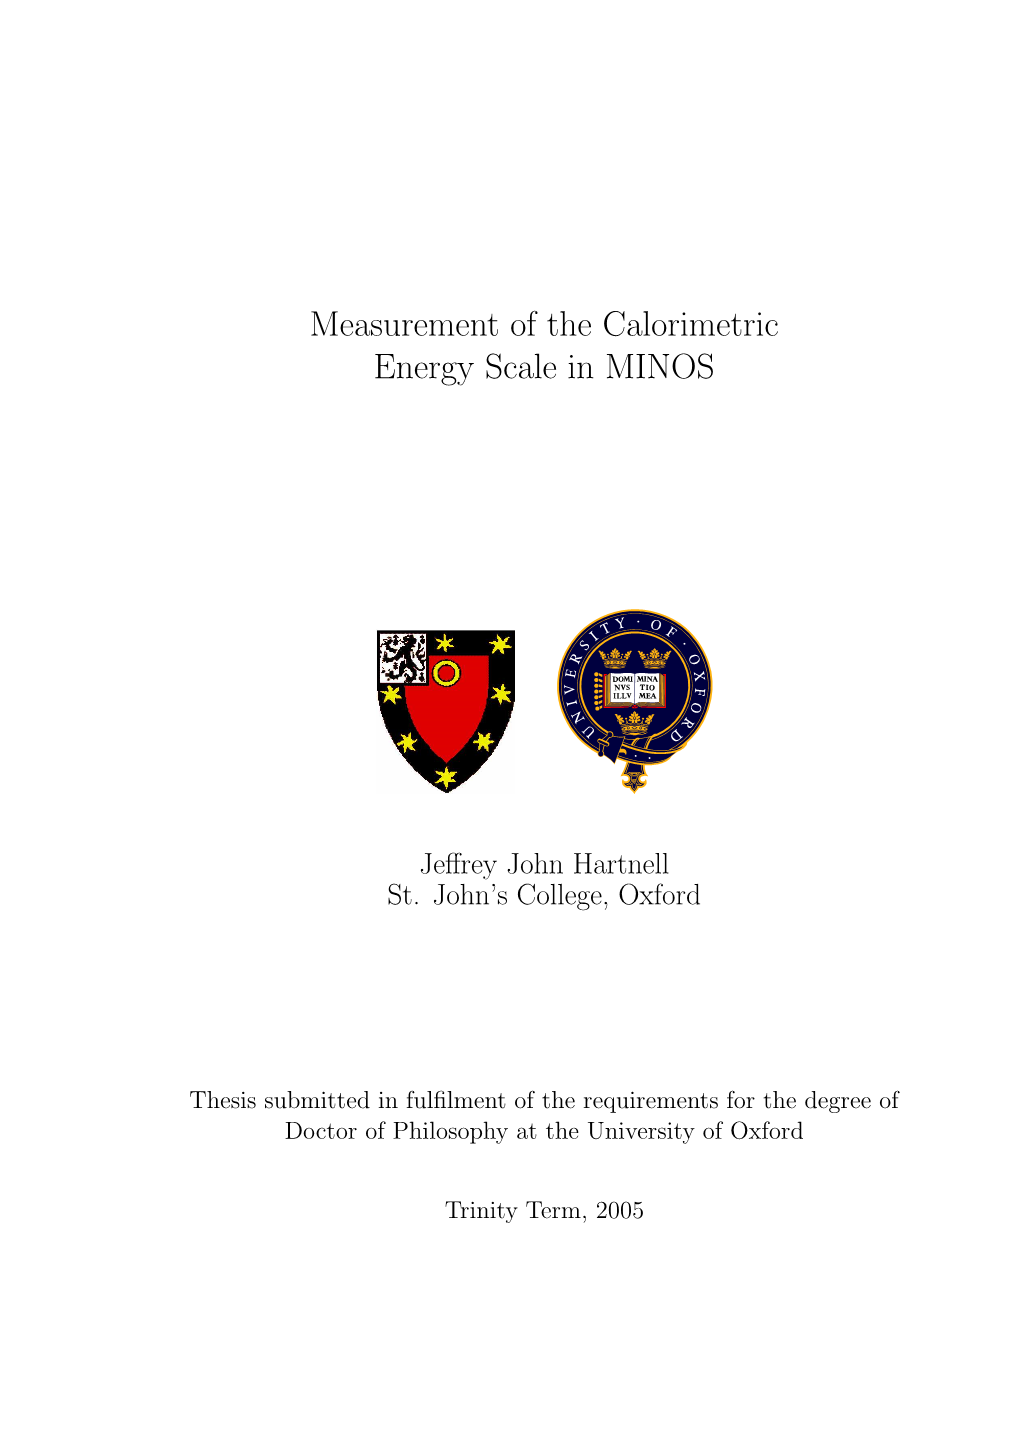 Measurement of the Calorimetric Energy Scale in MINOS